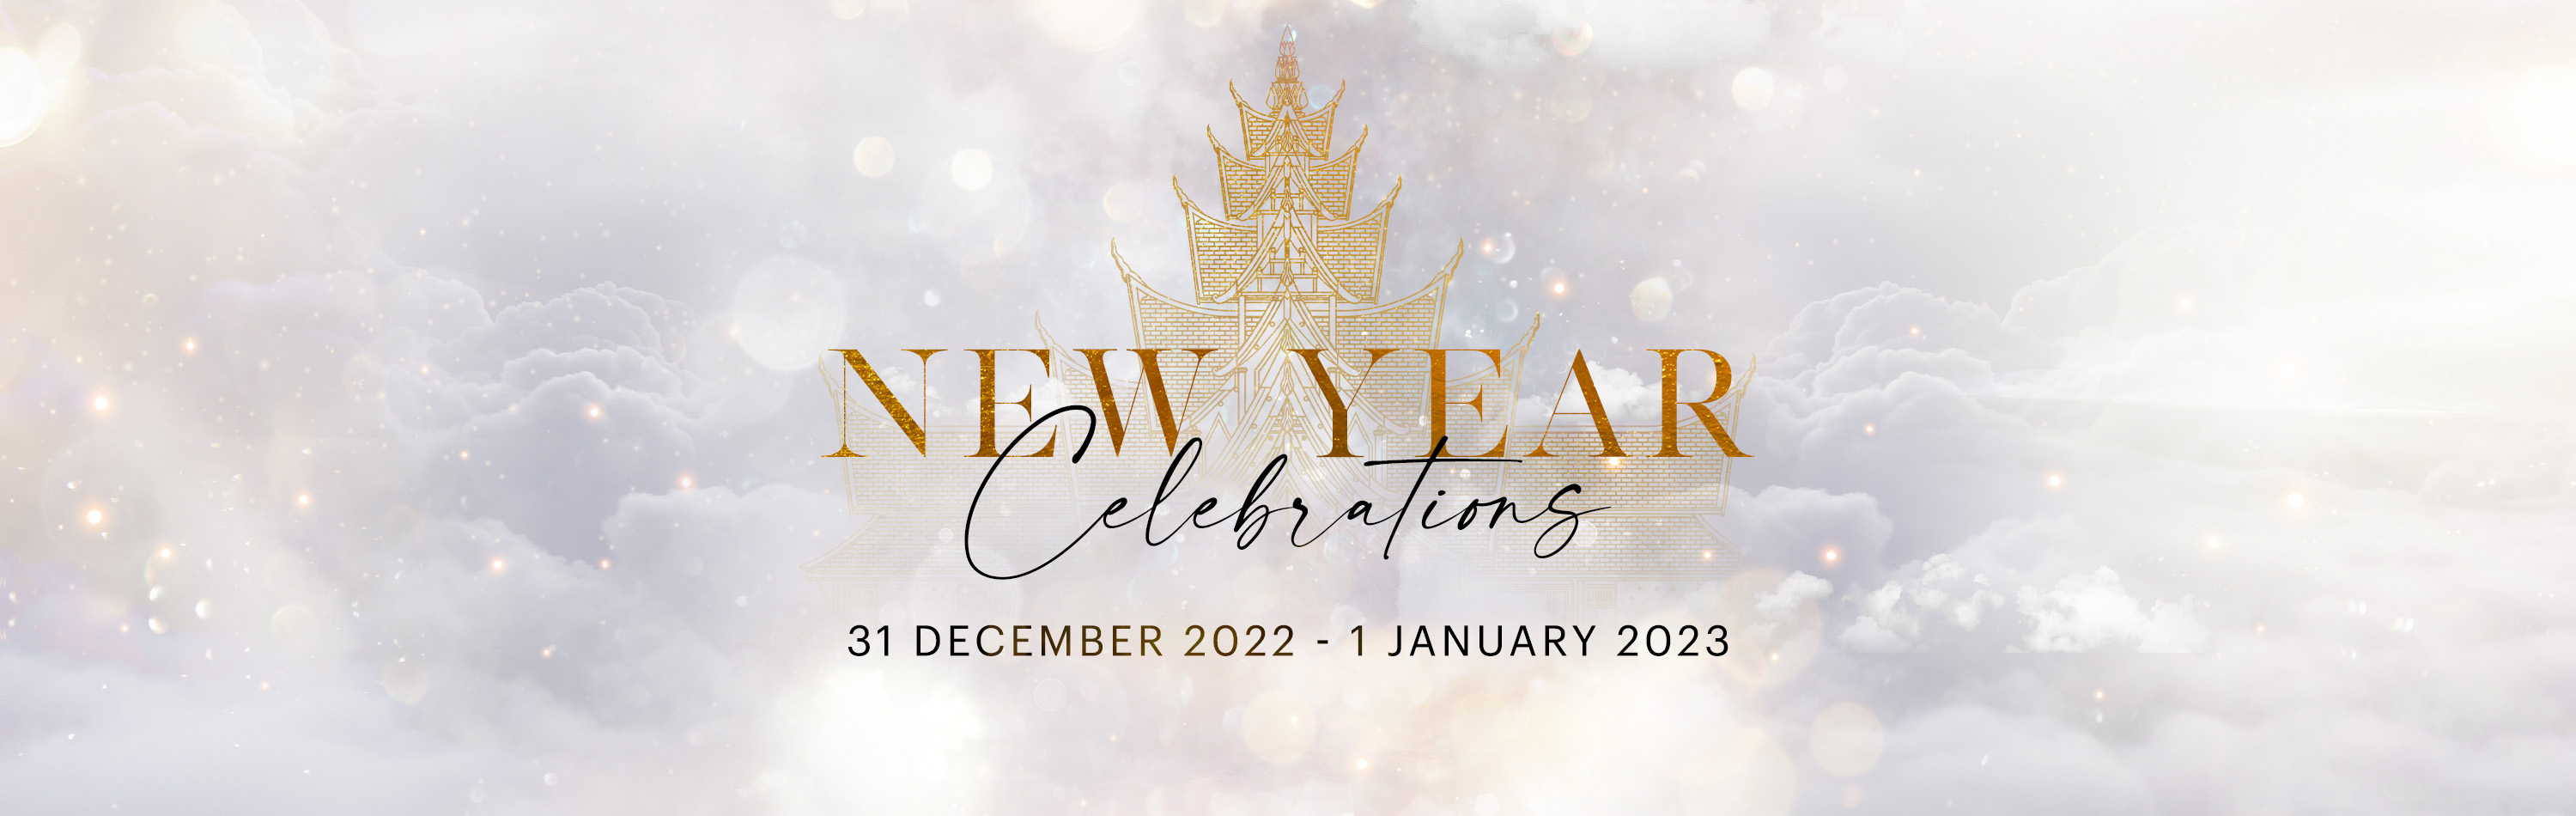 New Year Celebrations 2022